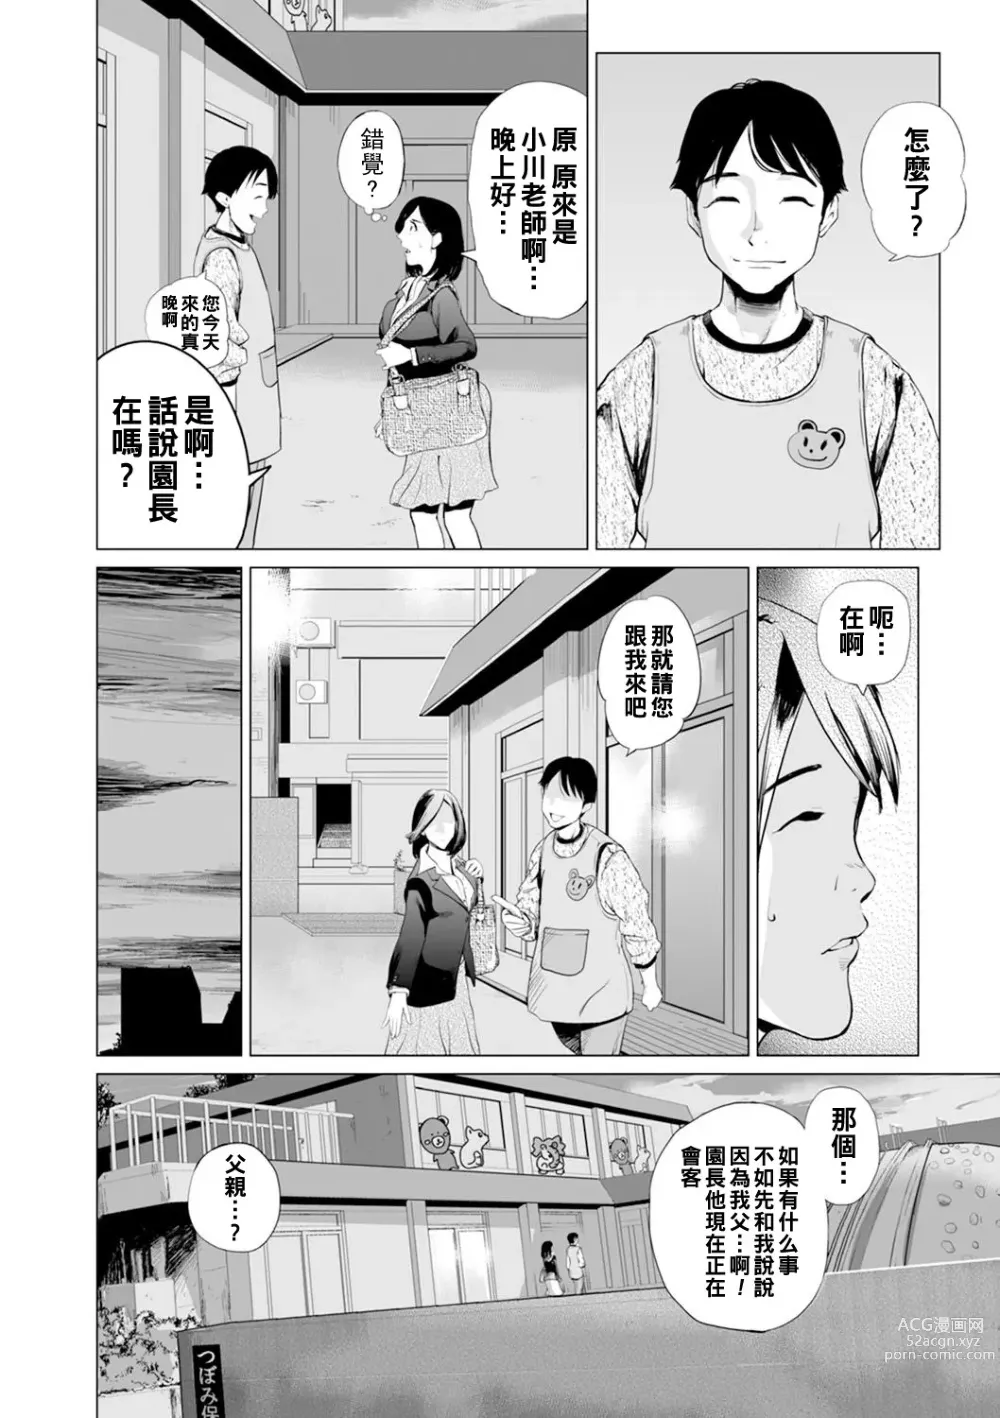 Page 6 of manga Hoikukan - Doukeshi no Kodane -